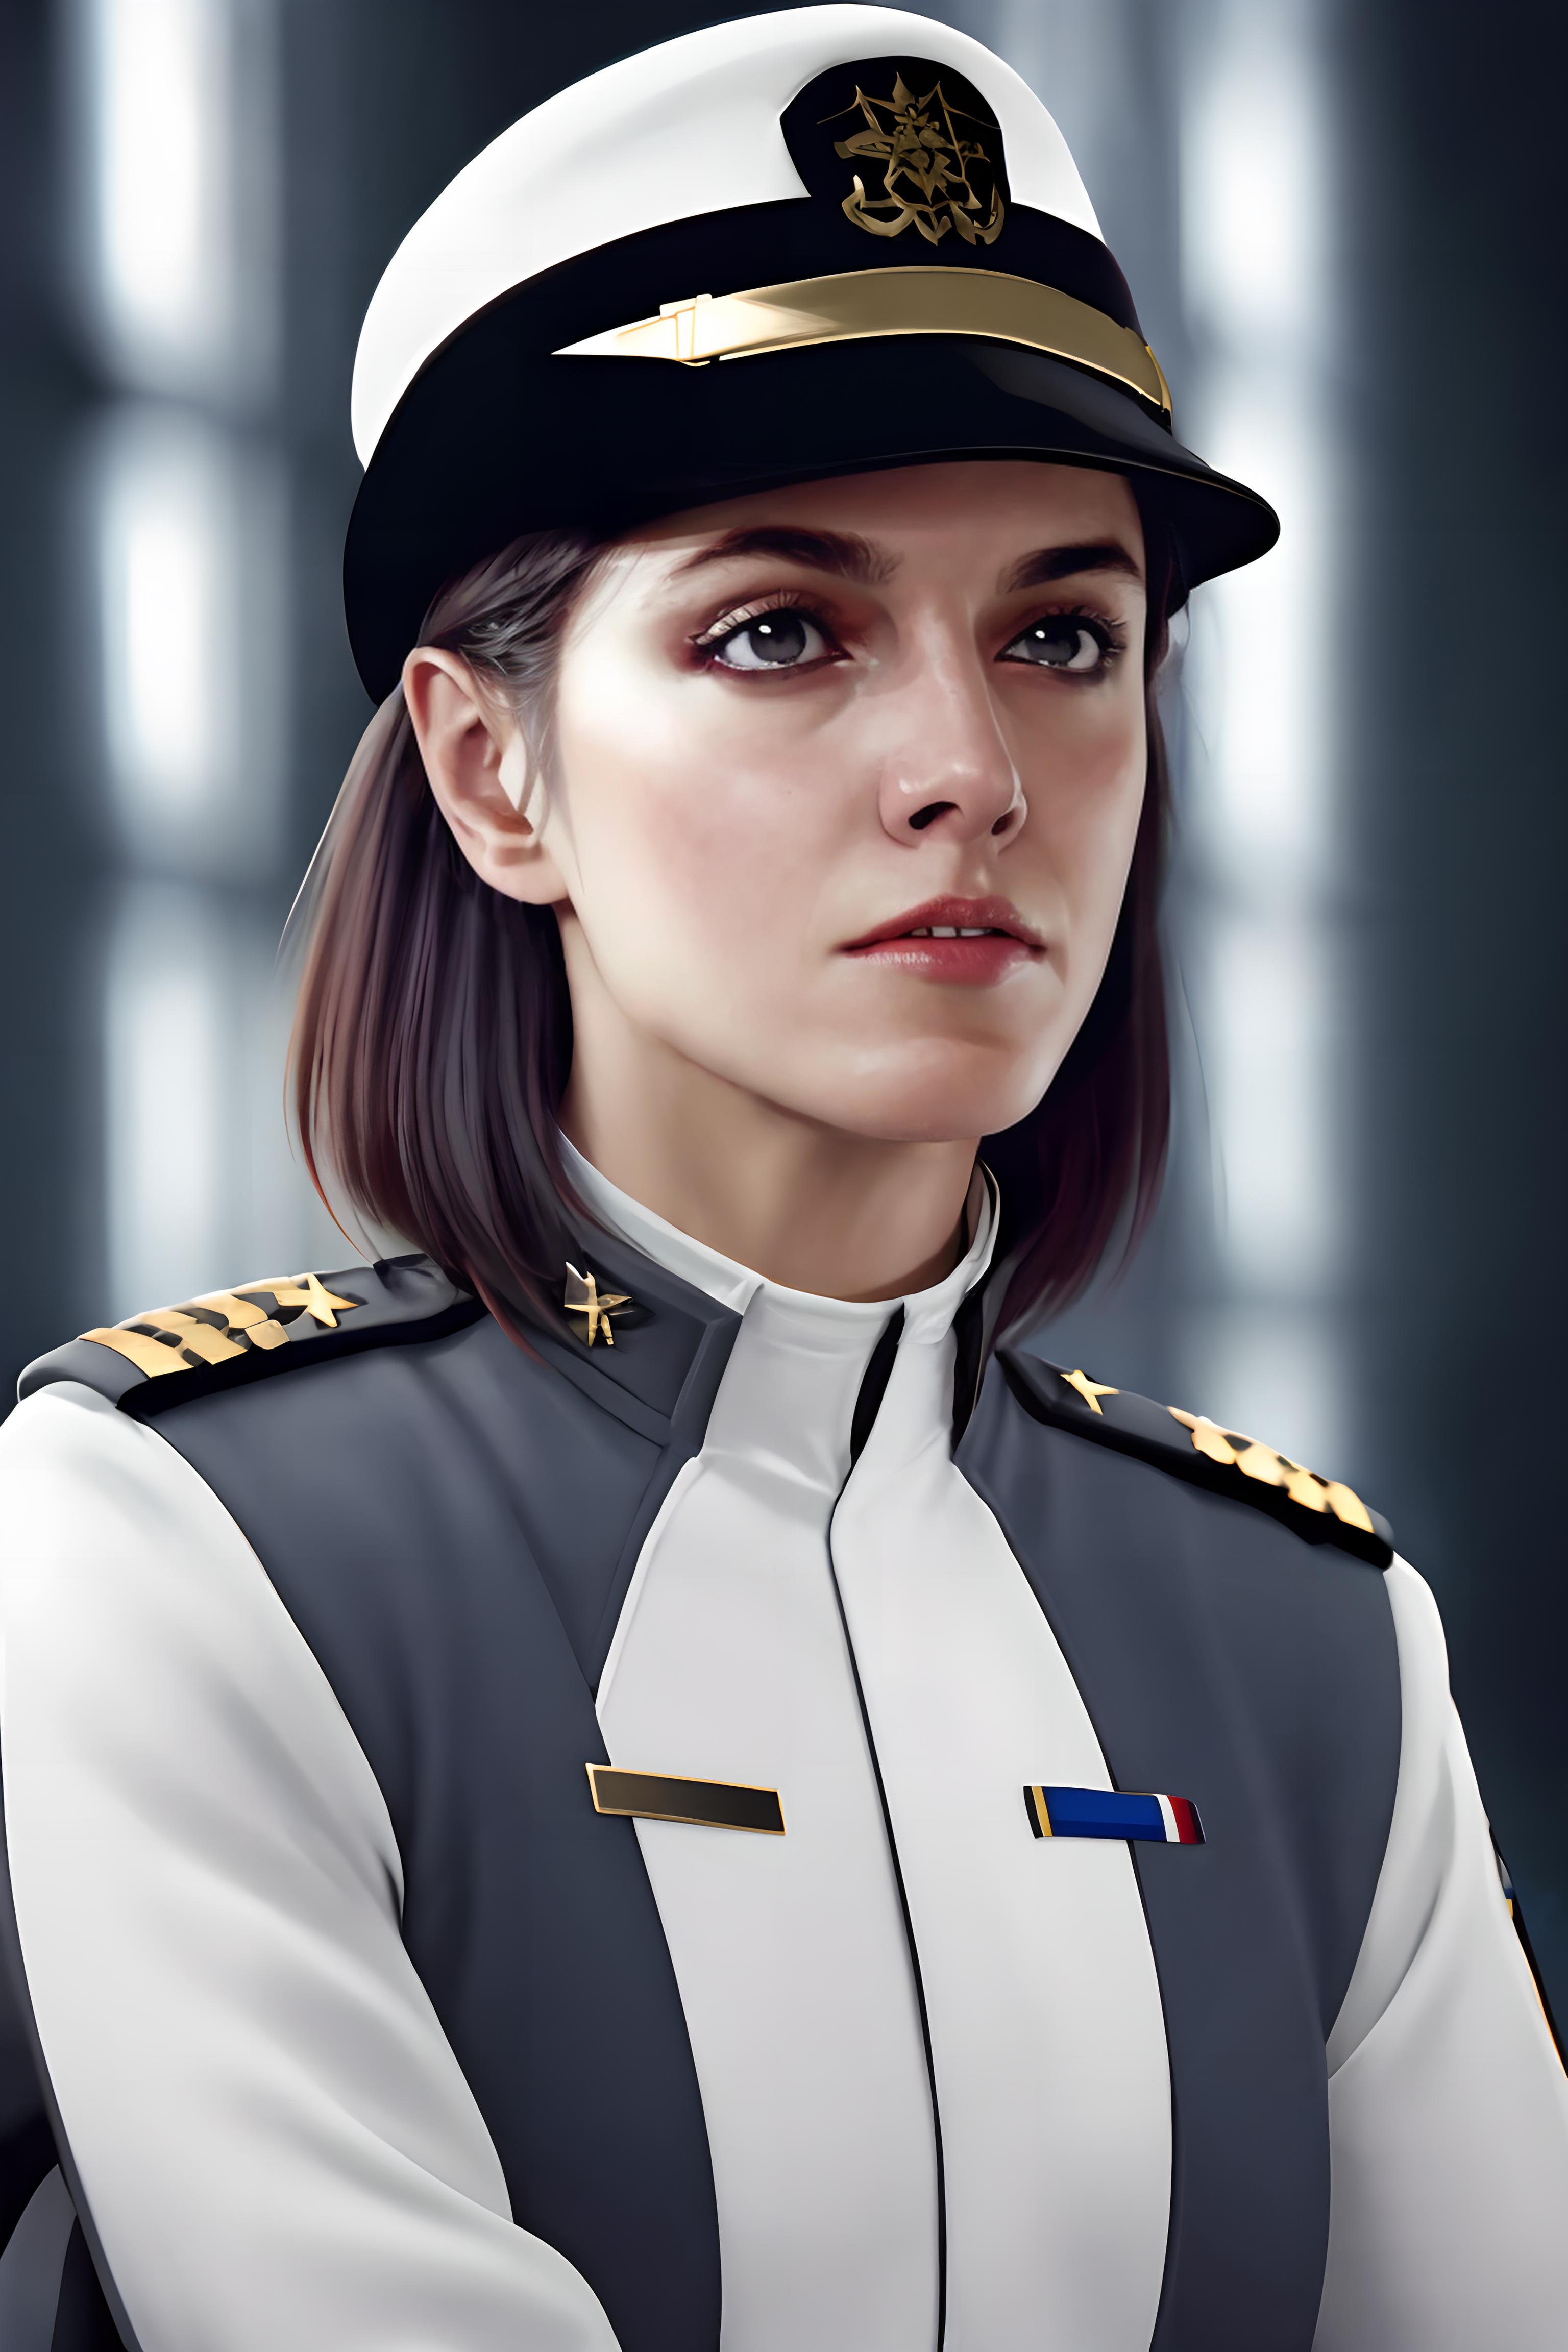 Miranda Keyes (Halo 2 cinematic) image by Huevoasesino2